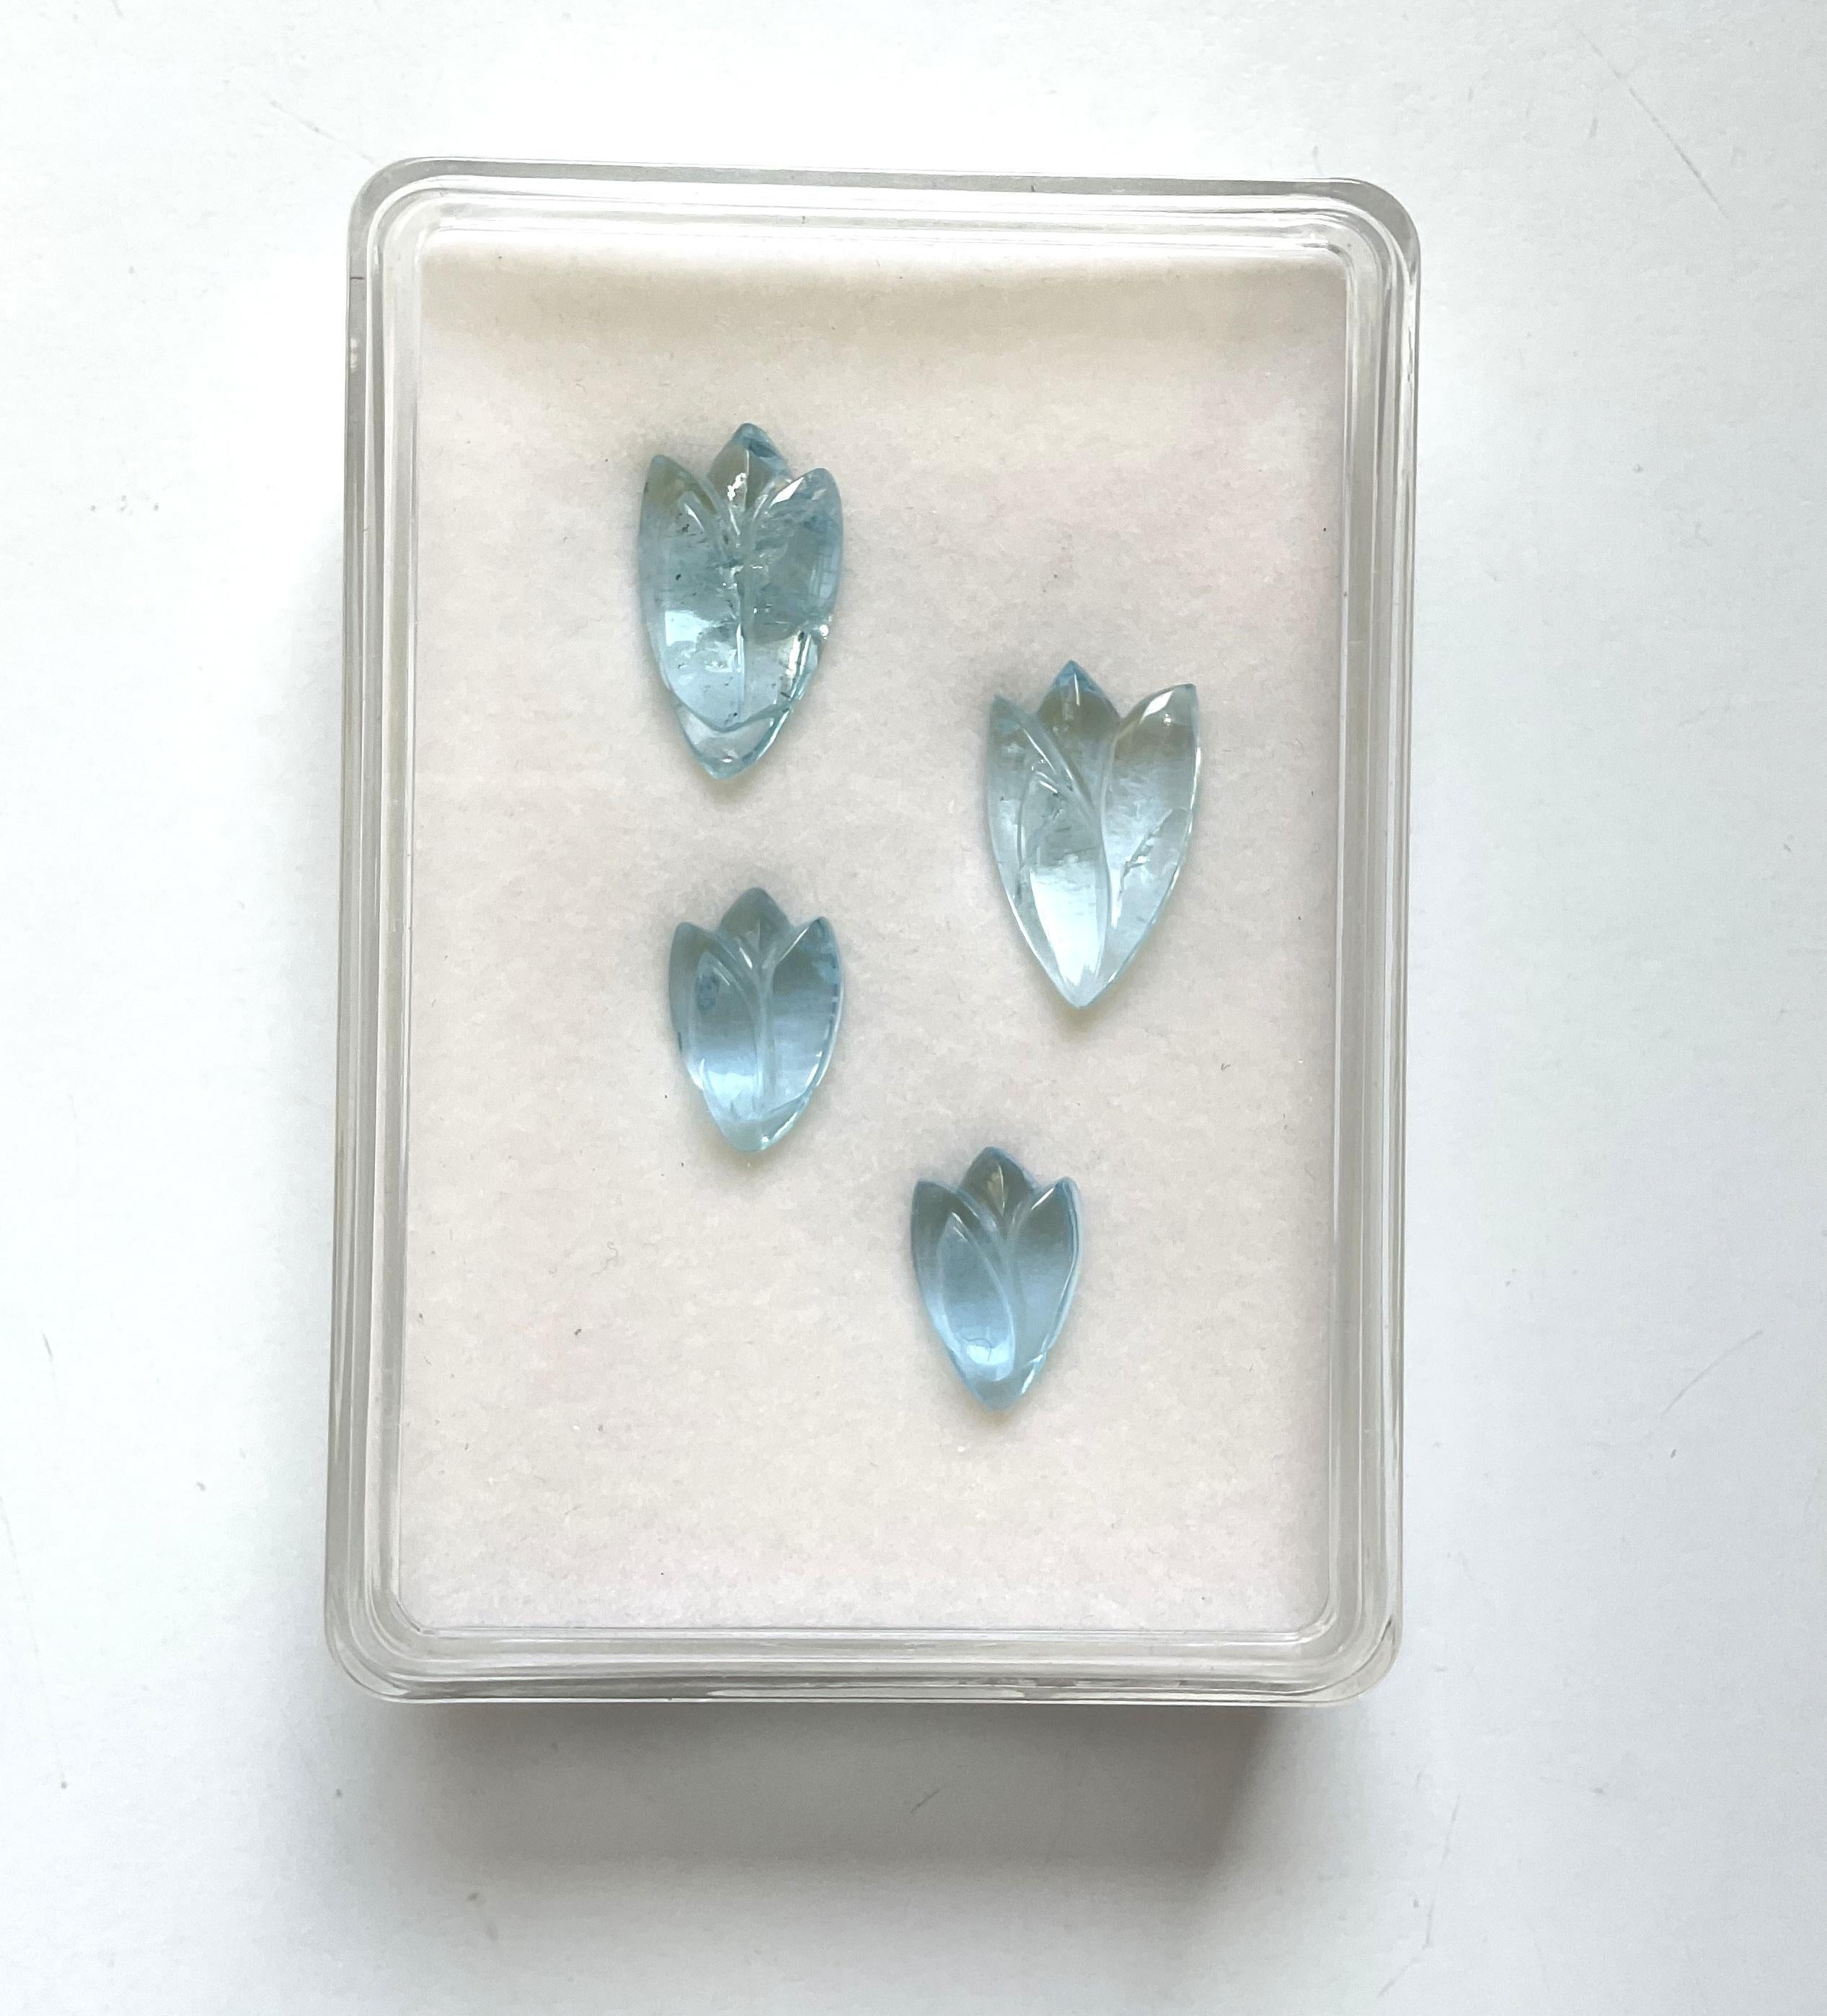 28.71 carats aquamarine petal carving 4 pieces set for jewelry natural gemstone

Gemstone - Aquamarine
Weight: 28.71 Carats
Size:12x20 to 15x10 MM
Pieces: 4